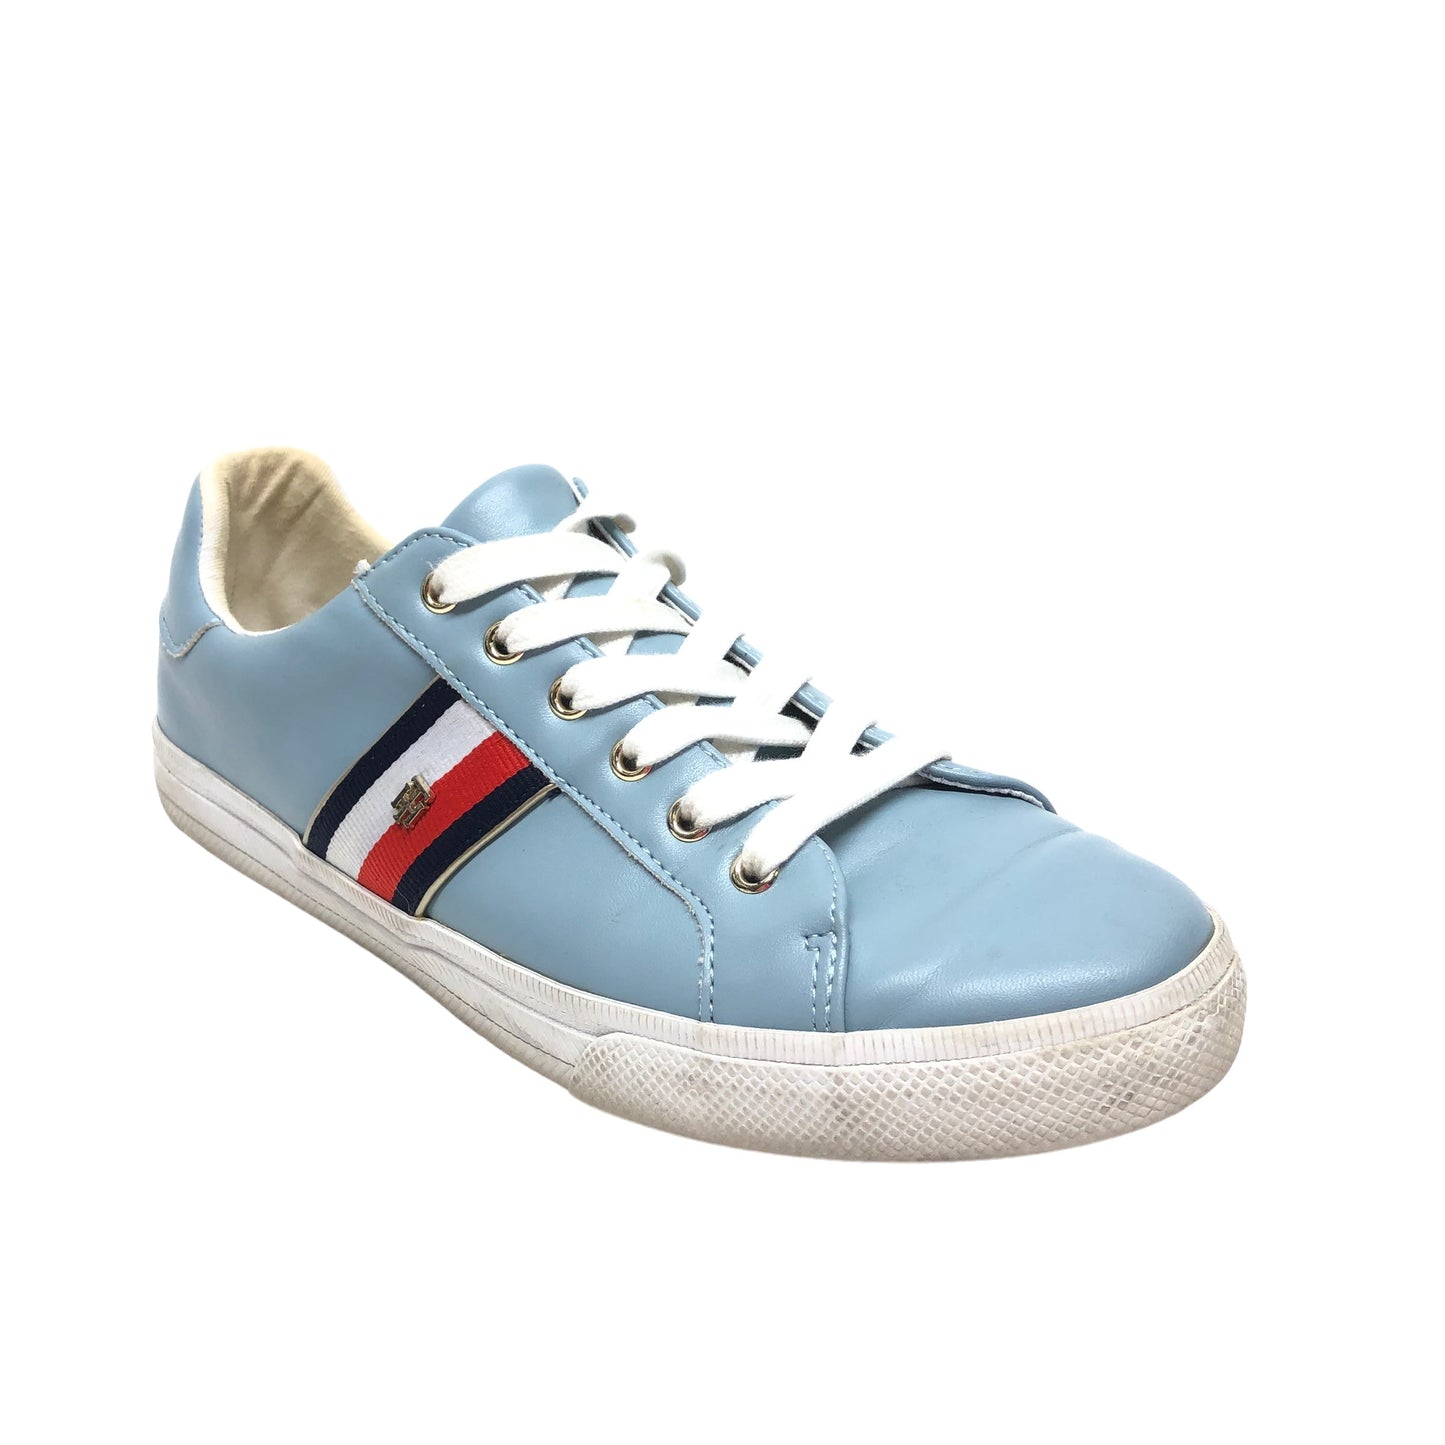 Blue Shoes Flats Tommy Hilfiger, Size 10